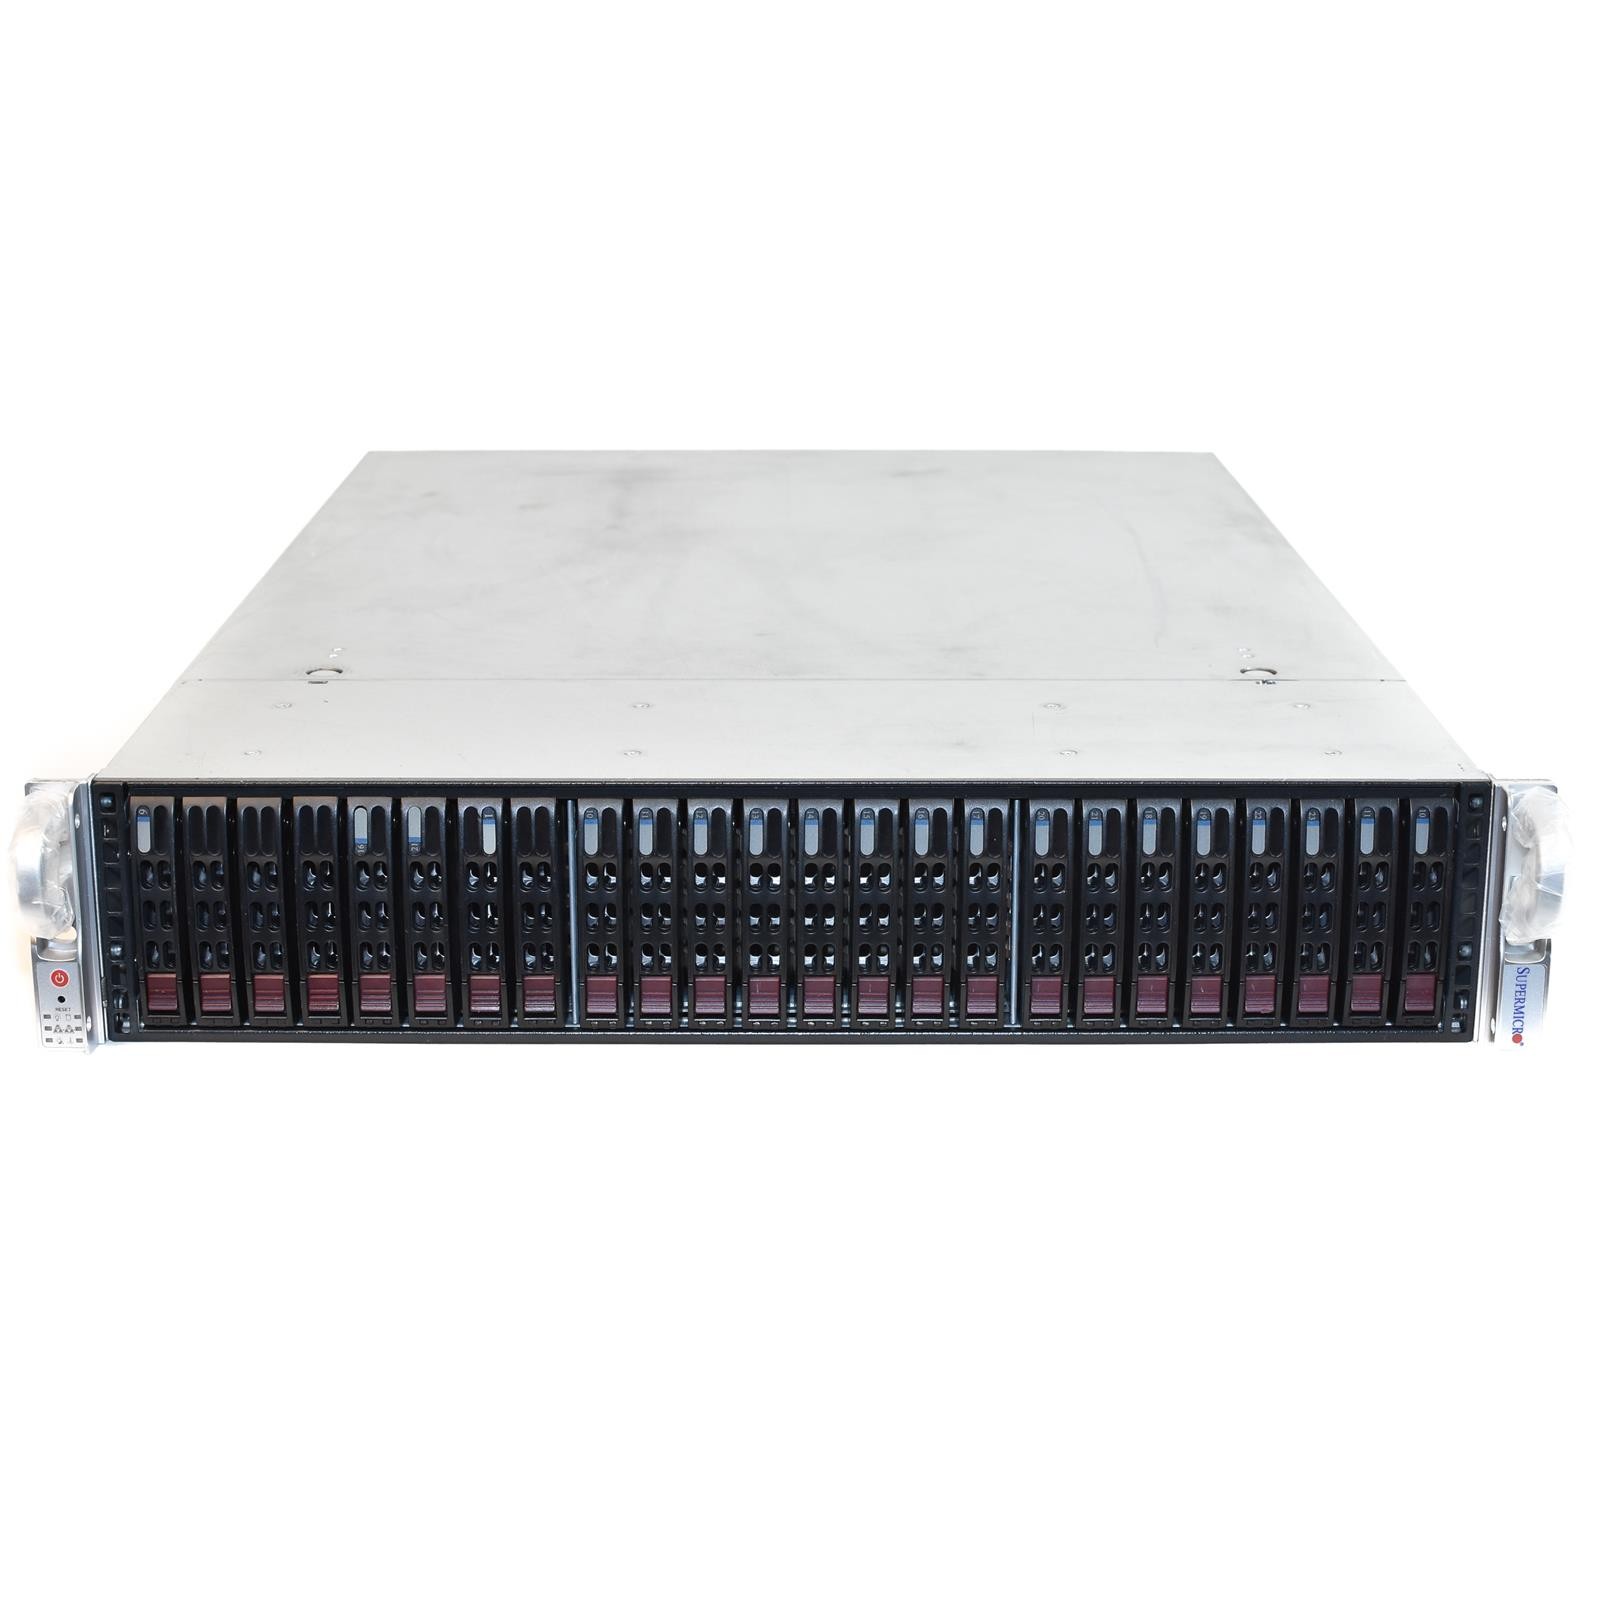 Supermicro CSE-216 24-Bay 2U Server Chassis w/ X8DTU-F Dual